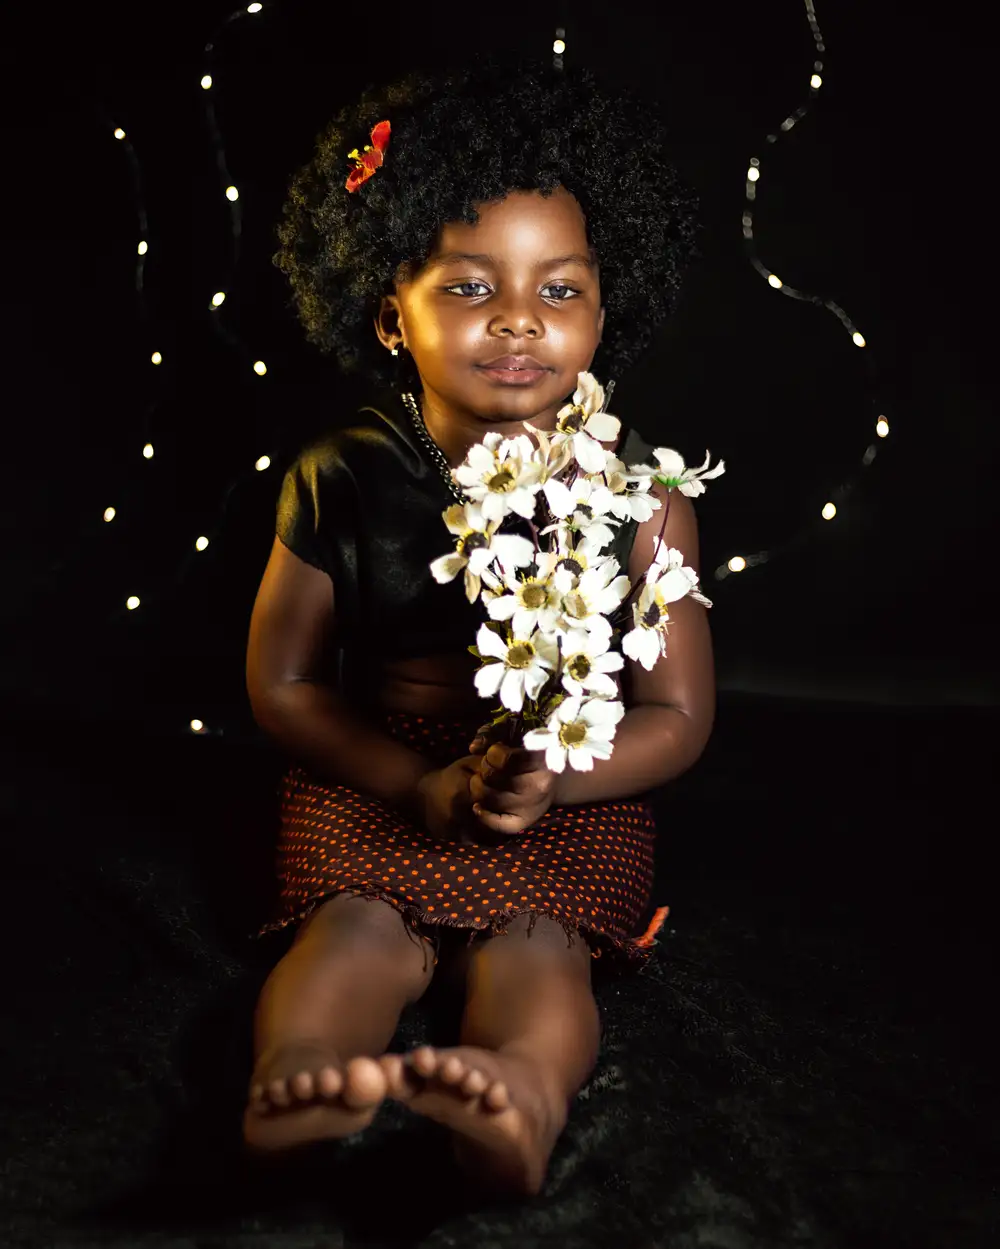 Black child holding flowers